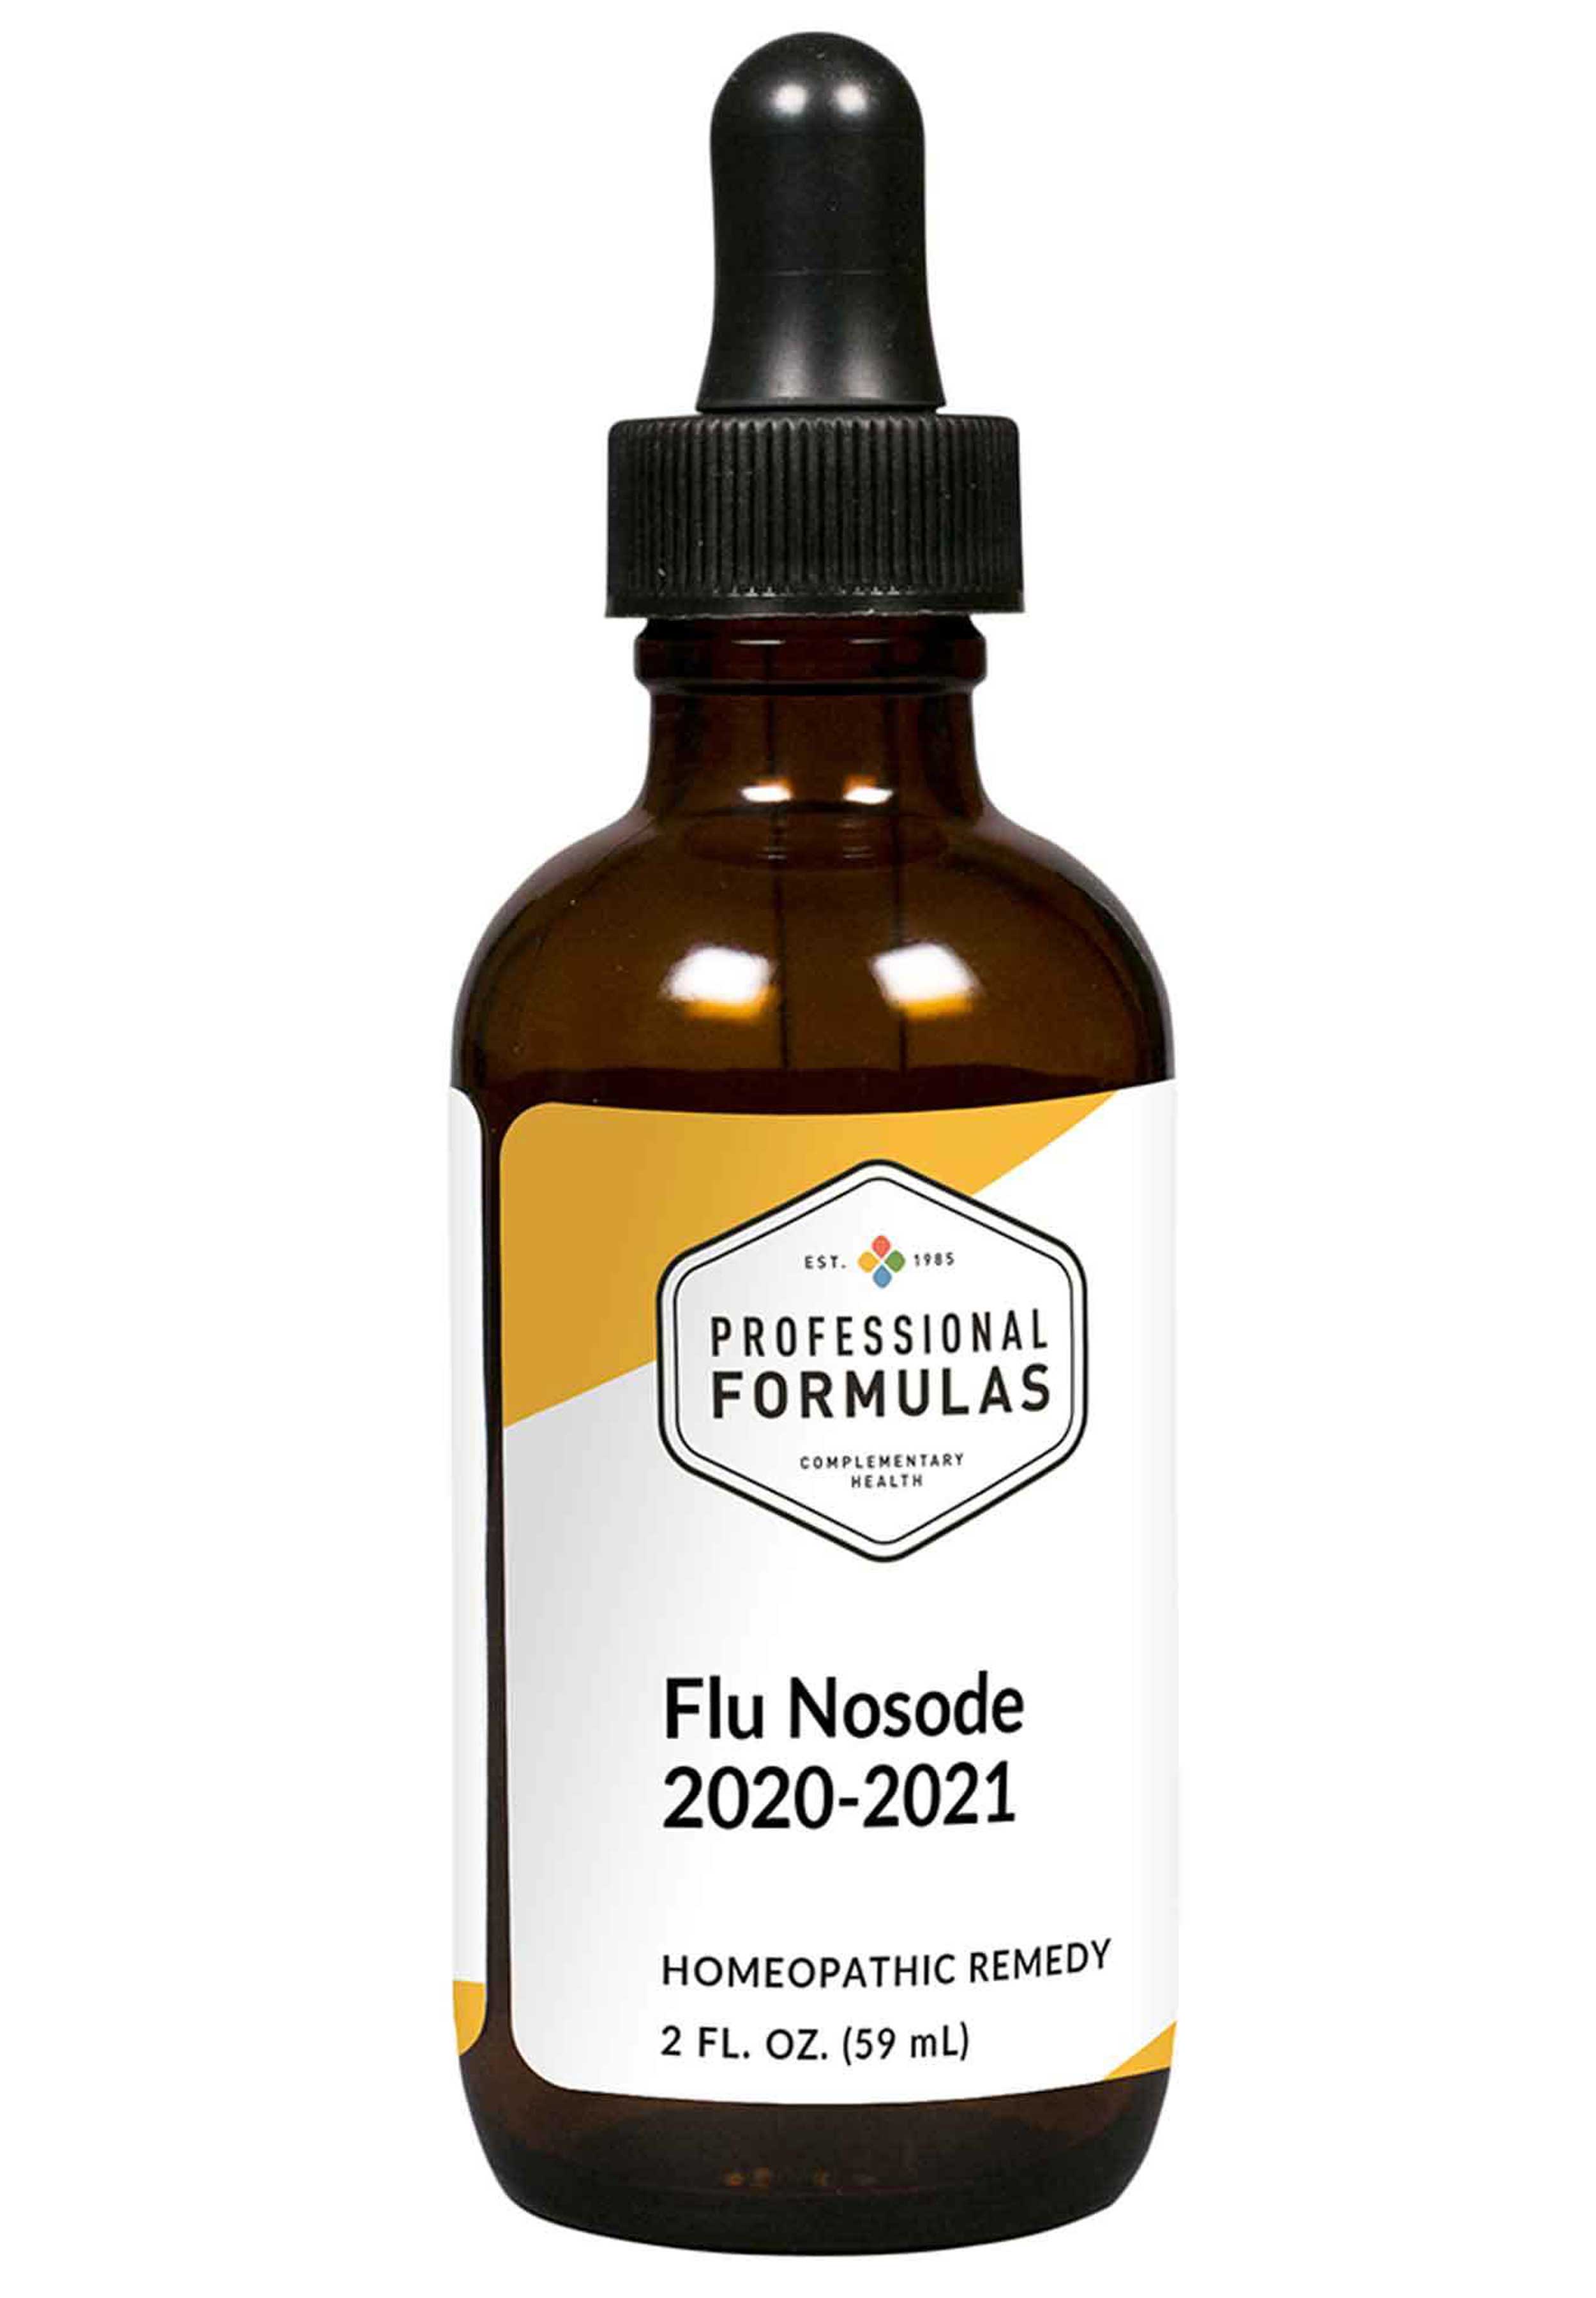 Professional Formulas Flu Nosode 2020-2021